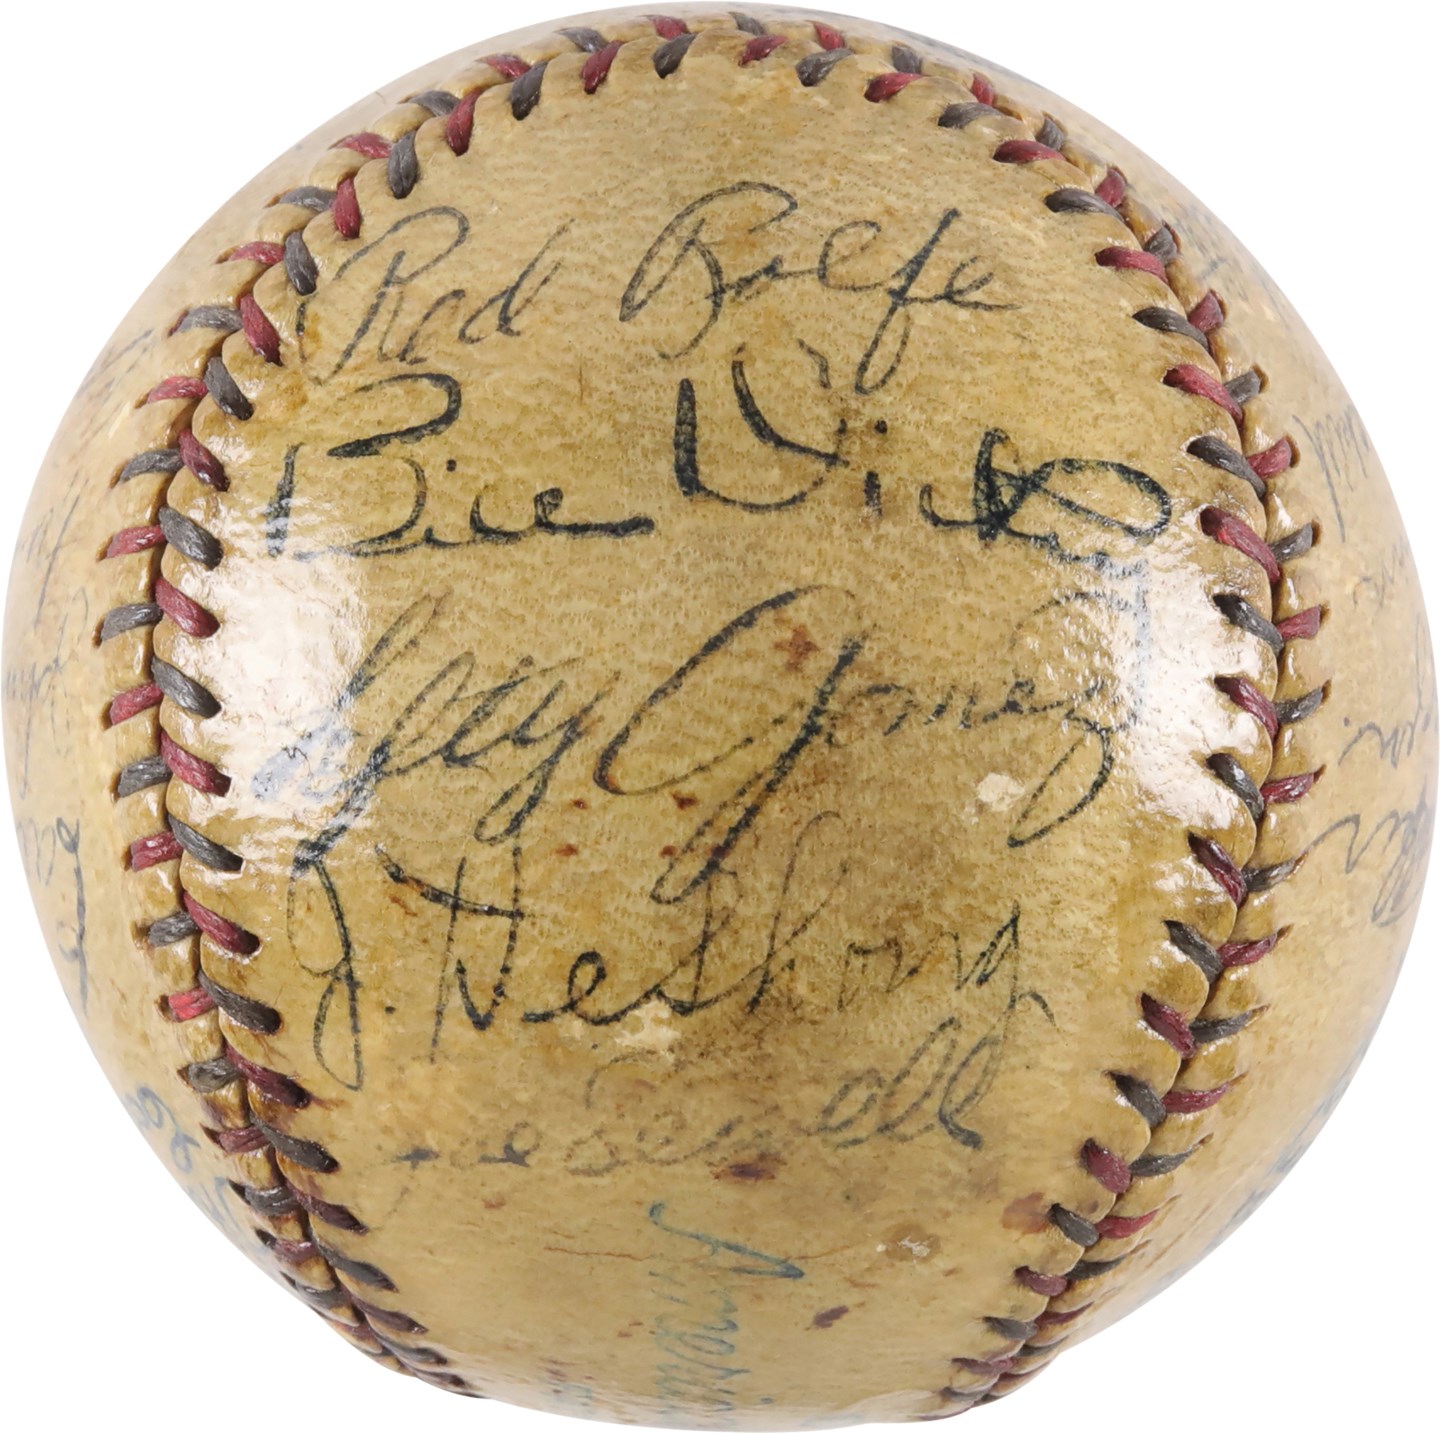 - 1935 New York Yankees Team-Signed Baseball